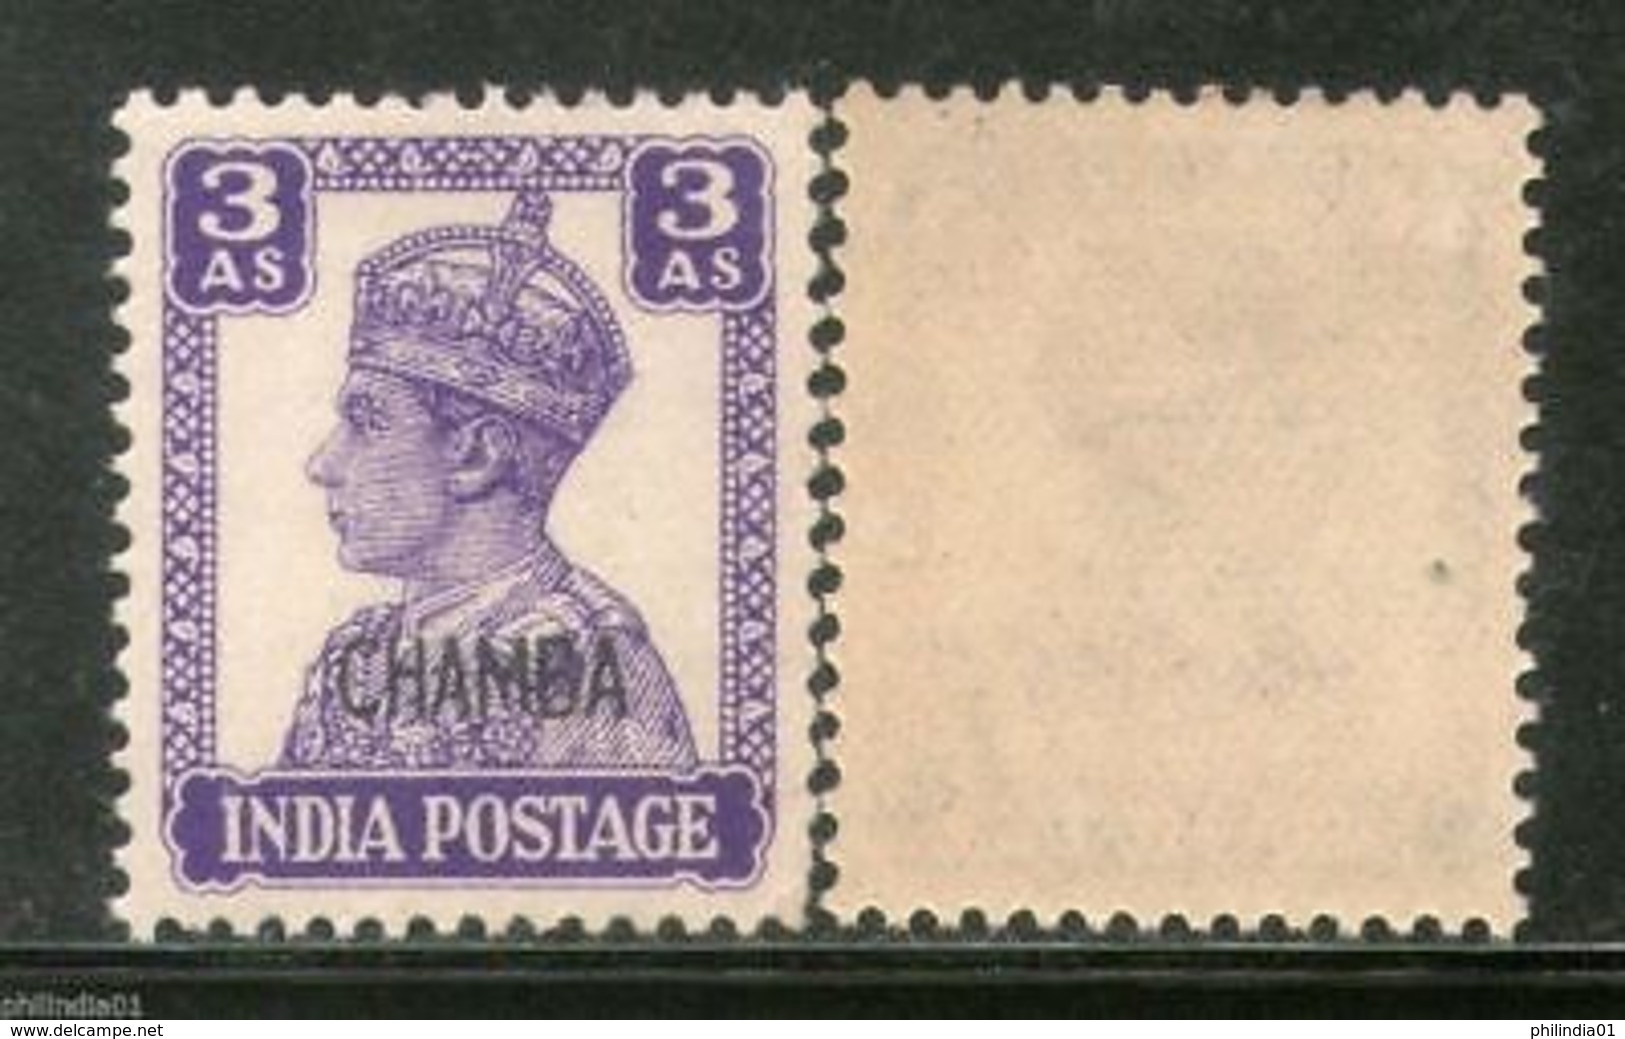 India CHAMBA State 3As Postage Stamp LITHOGRAPH KG VI SG 114 / Sc 95 Cat �27 MNH - Chamba